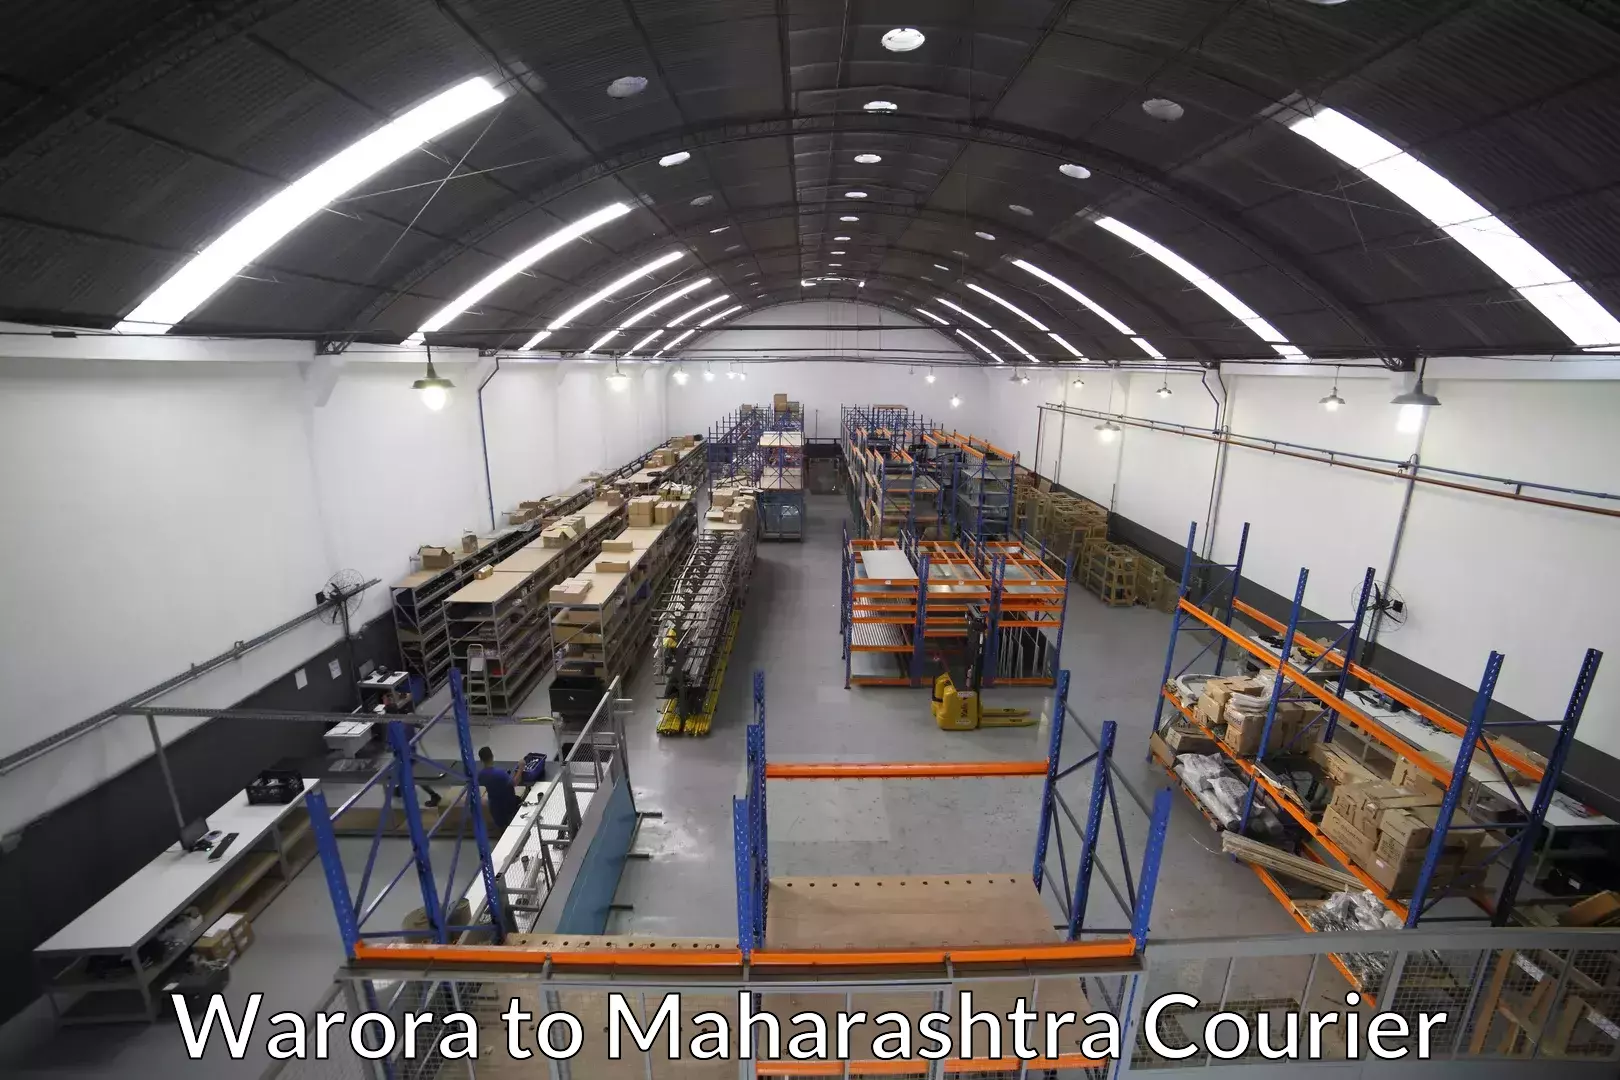 Professional moving company Warora to Ojhar